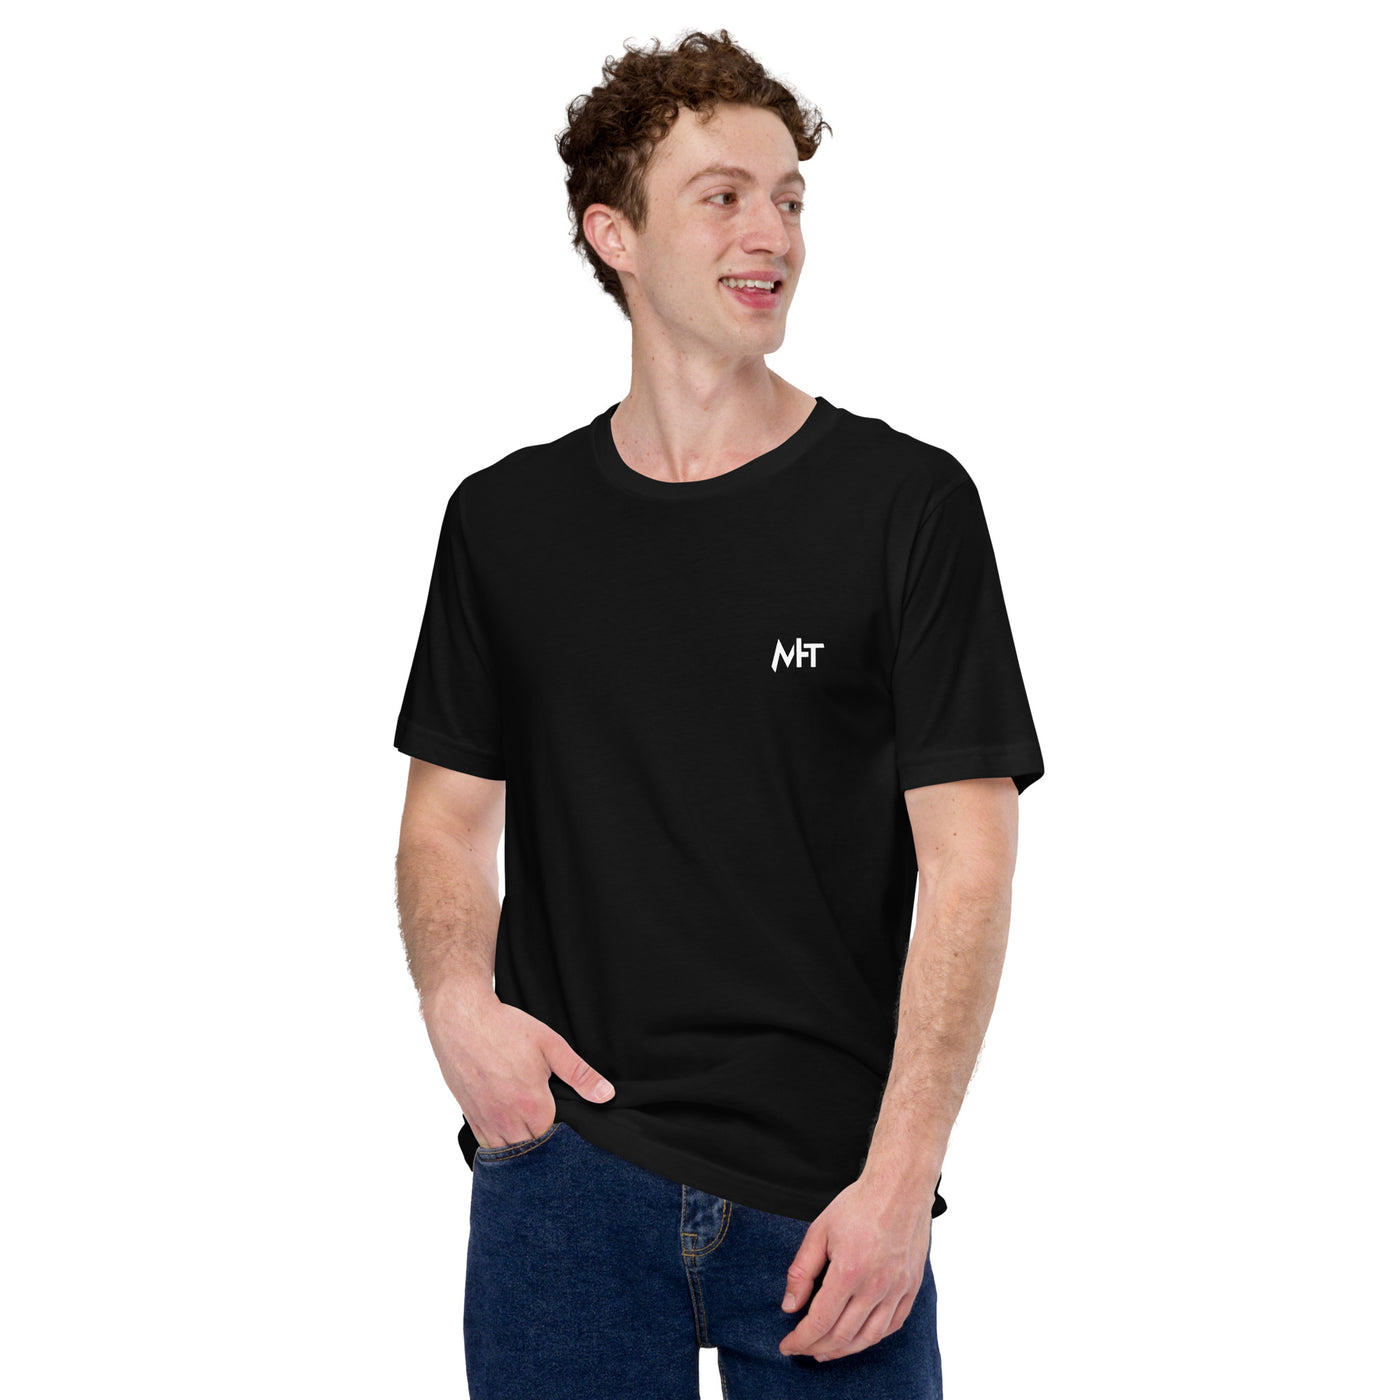 Software Engineer - Unisex t-shirt (back print)